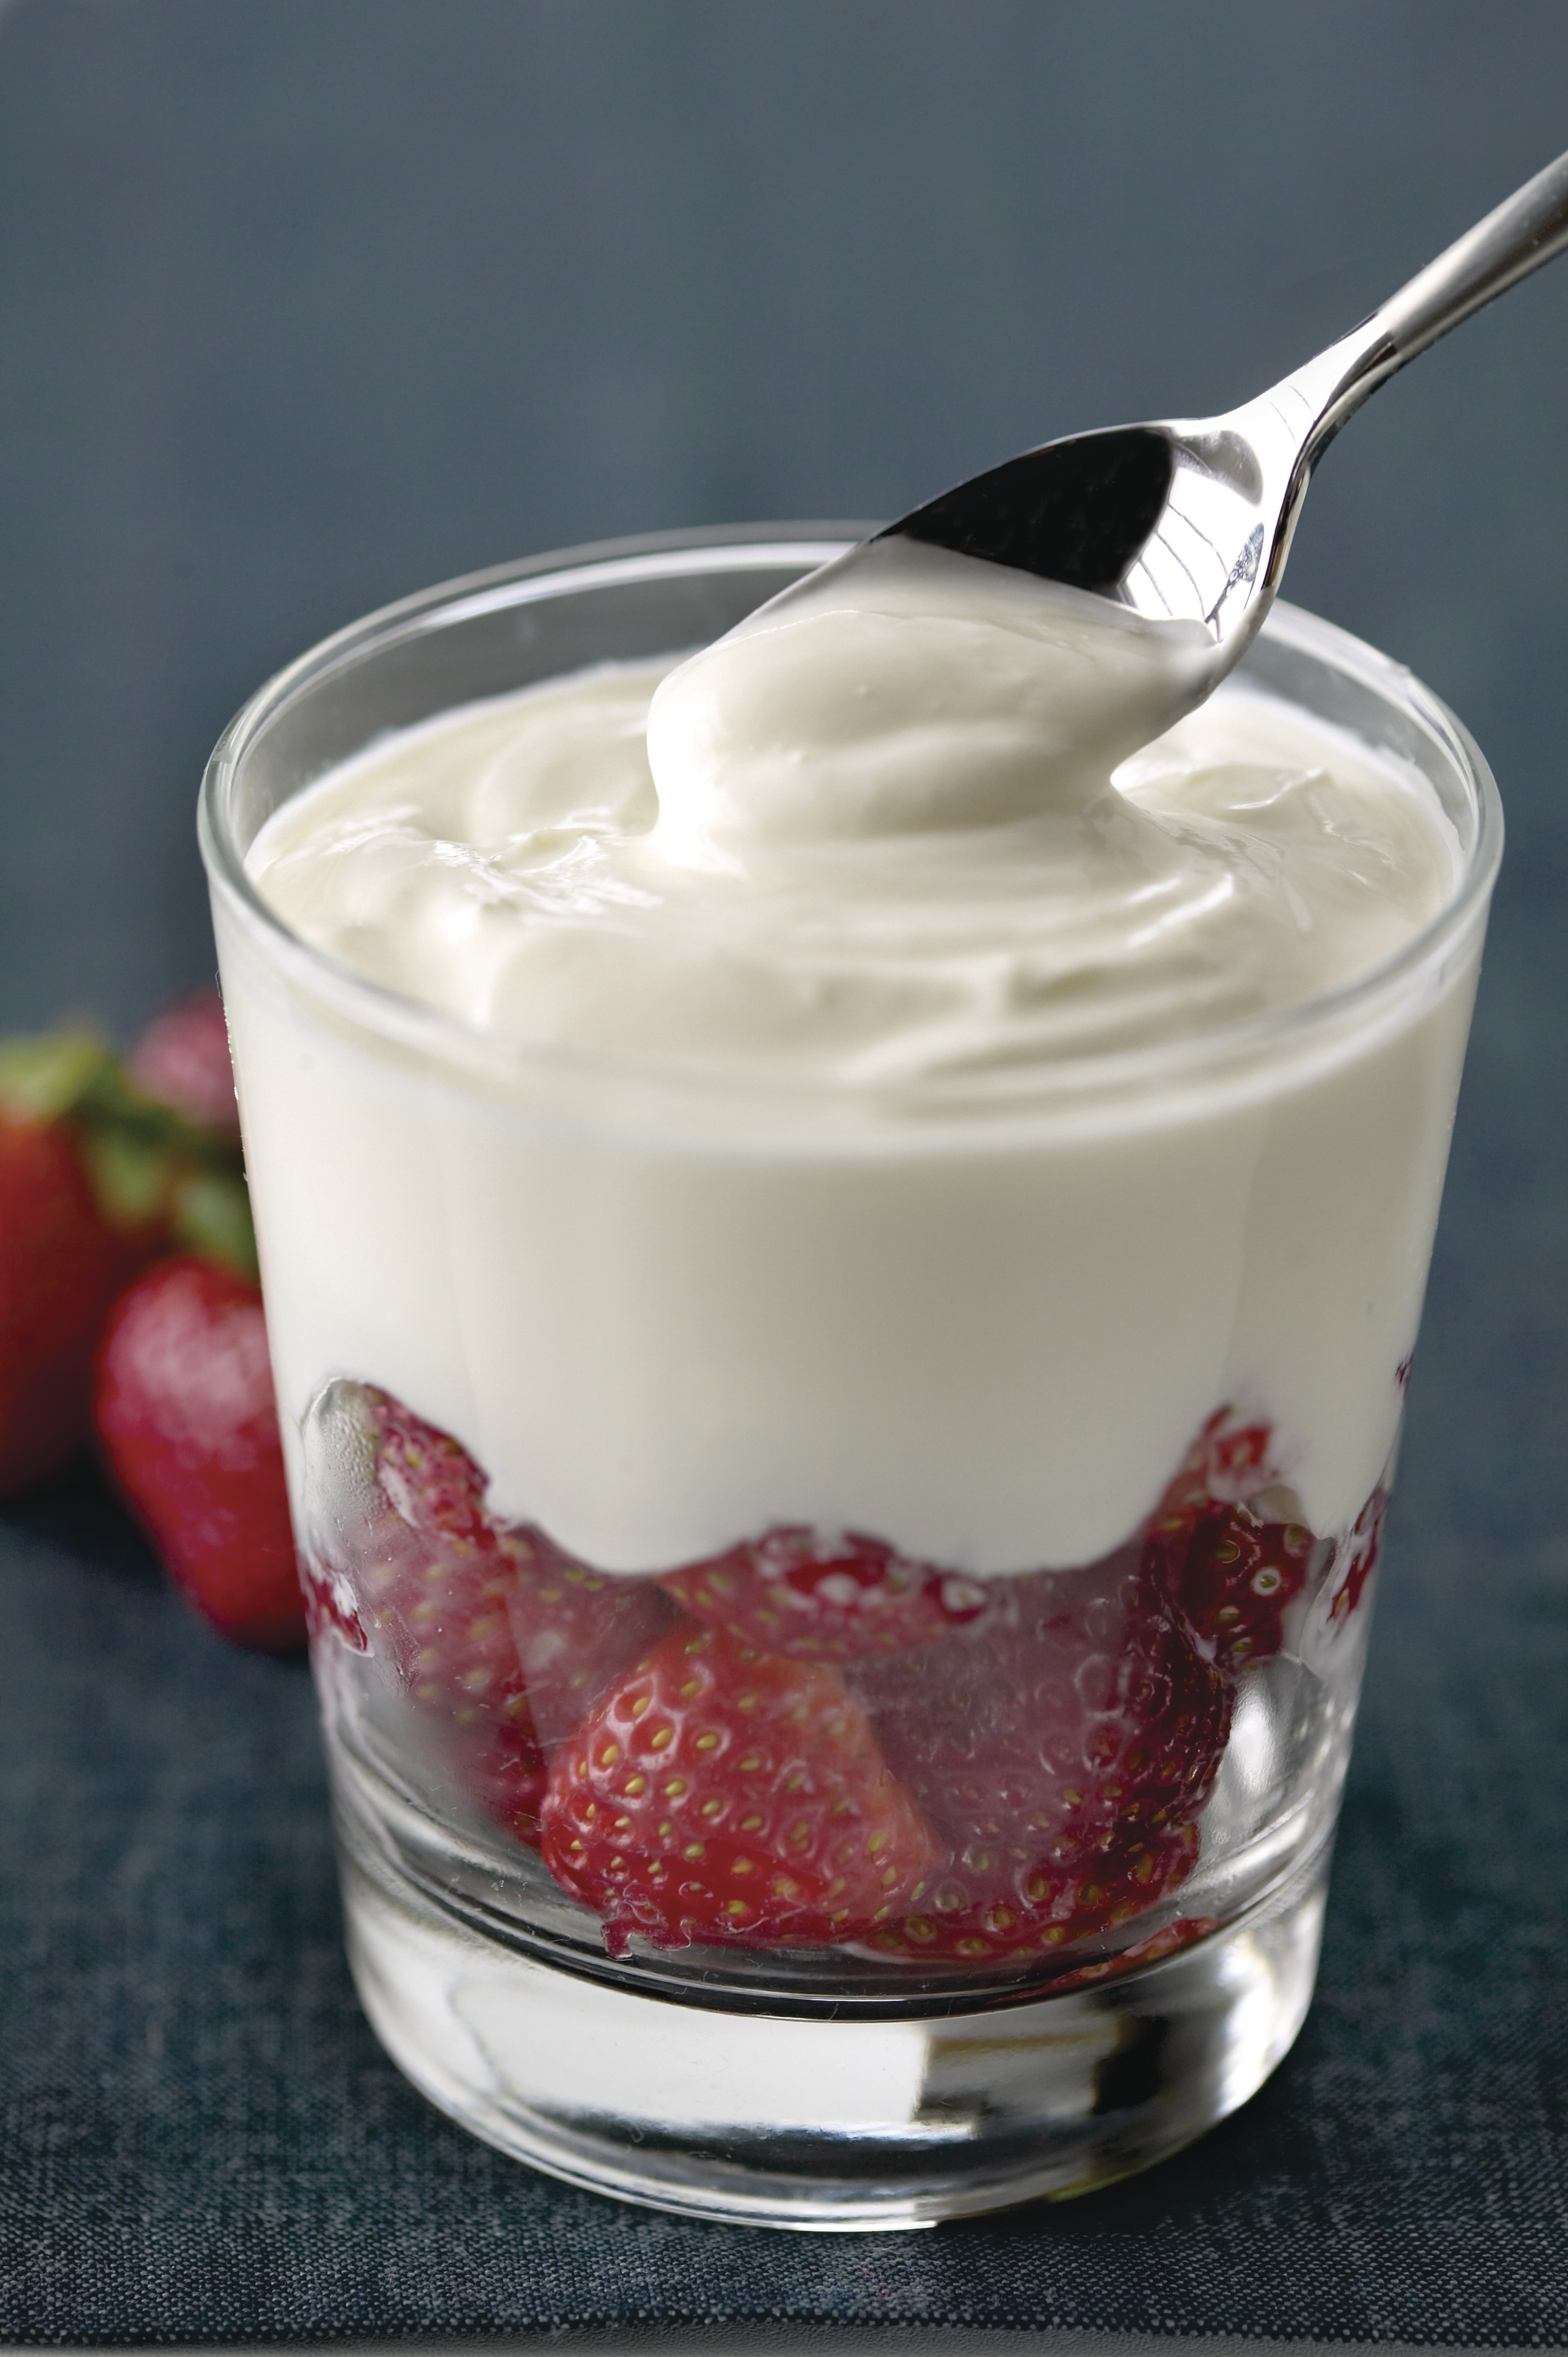 Glass of strawberries and cream